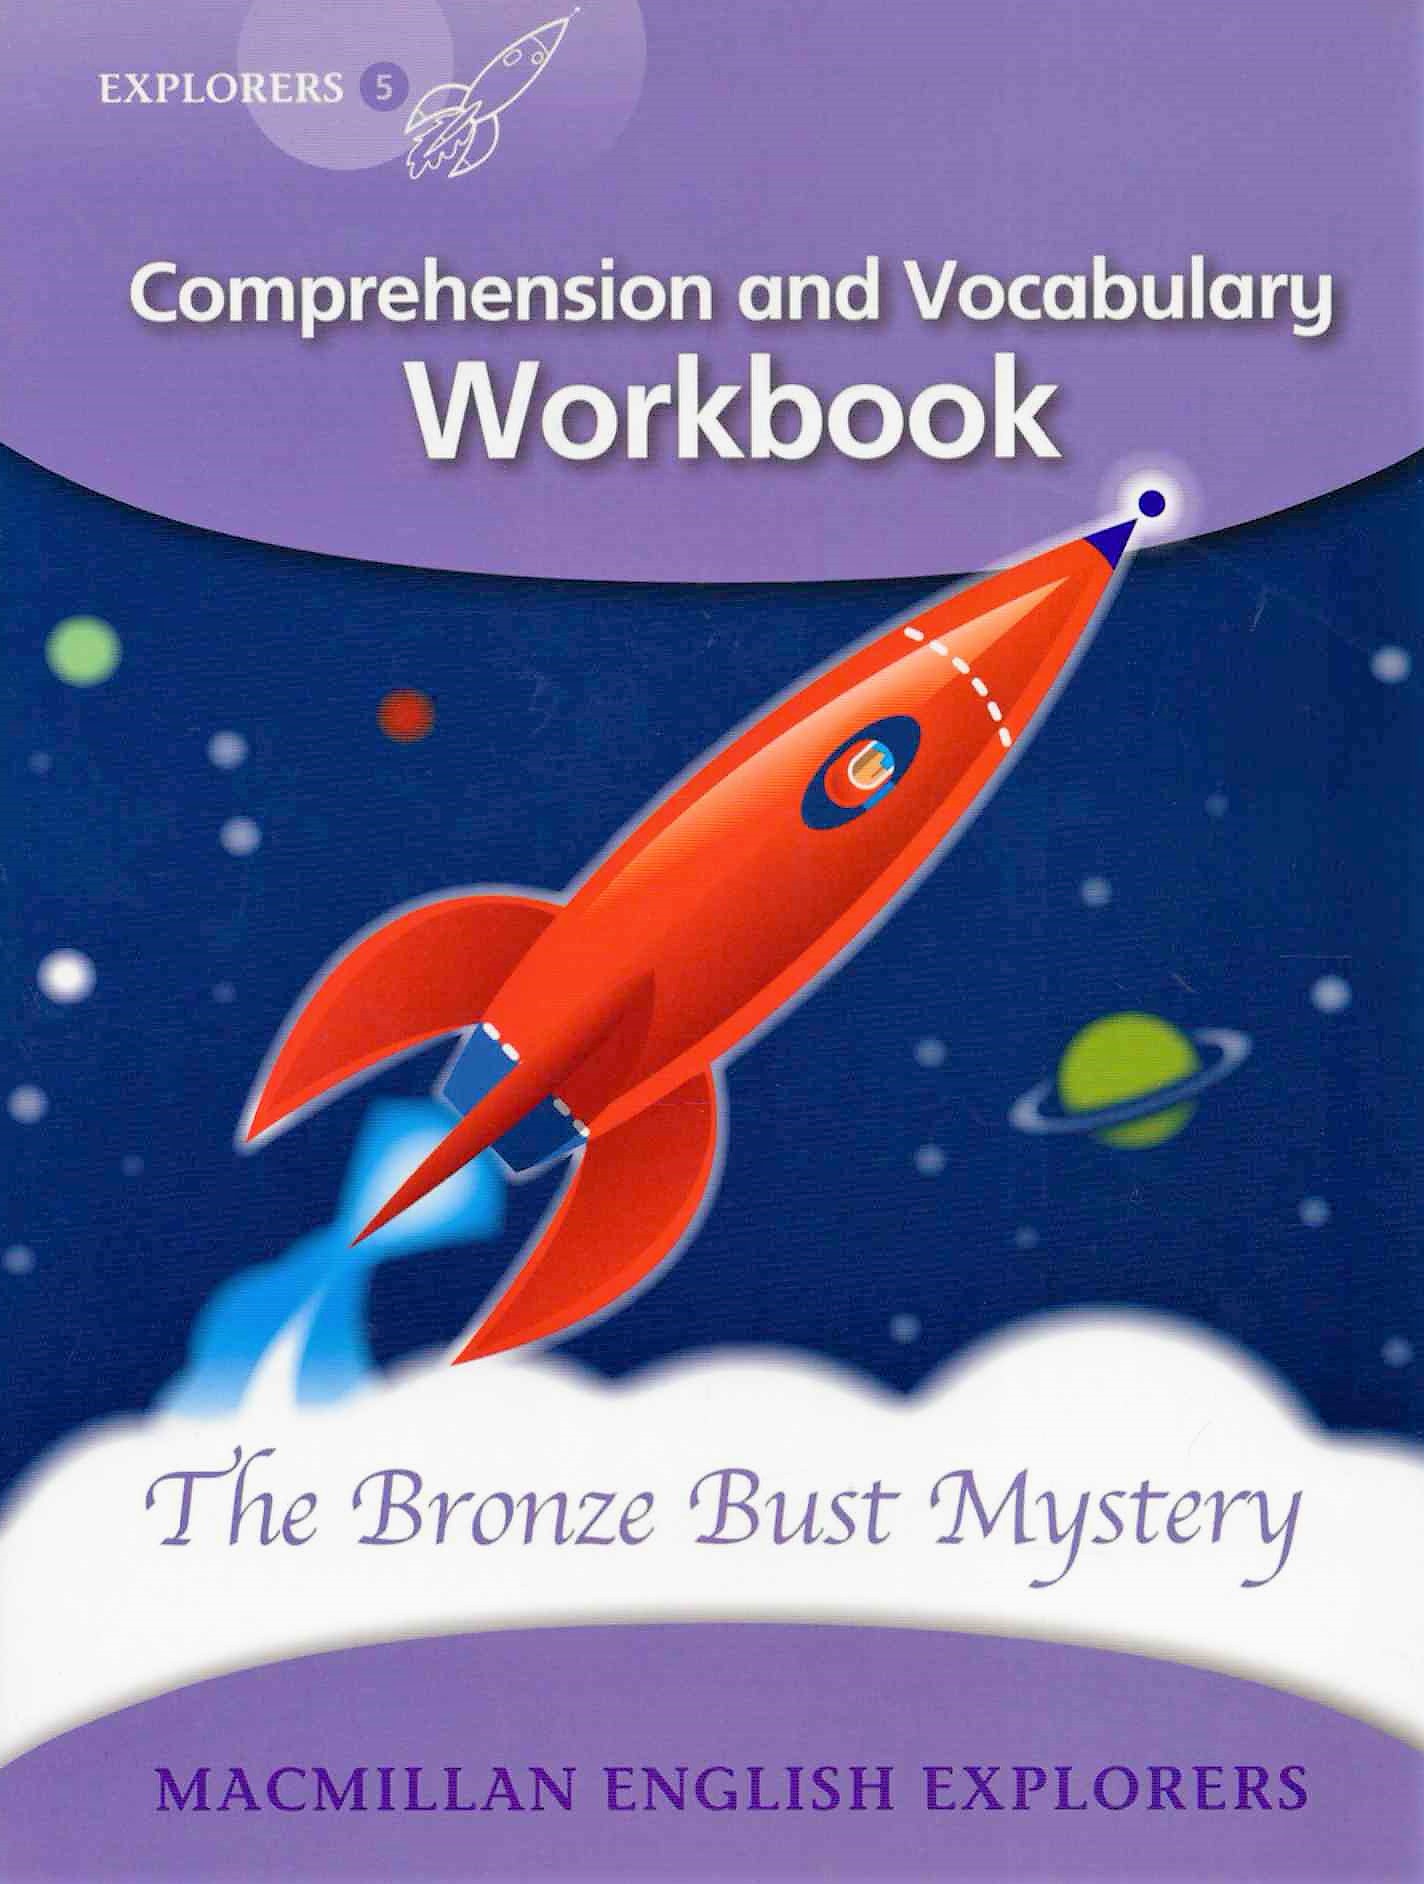 Young Explorers 5 Bronze Bust Mystery Workbook